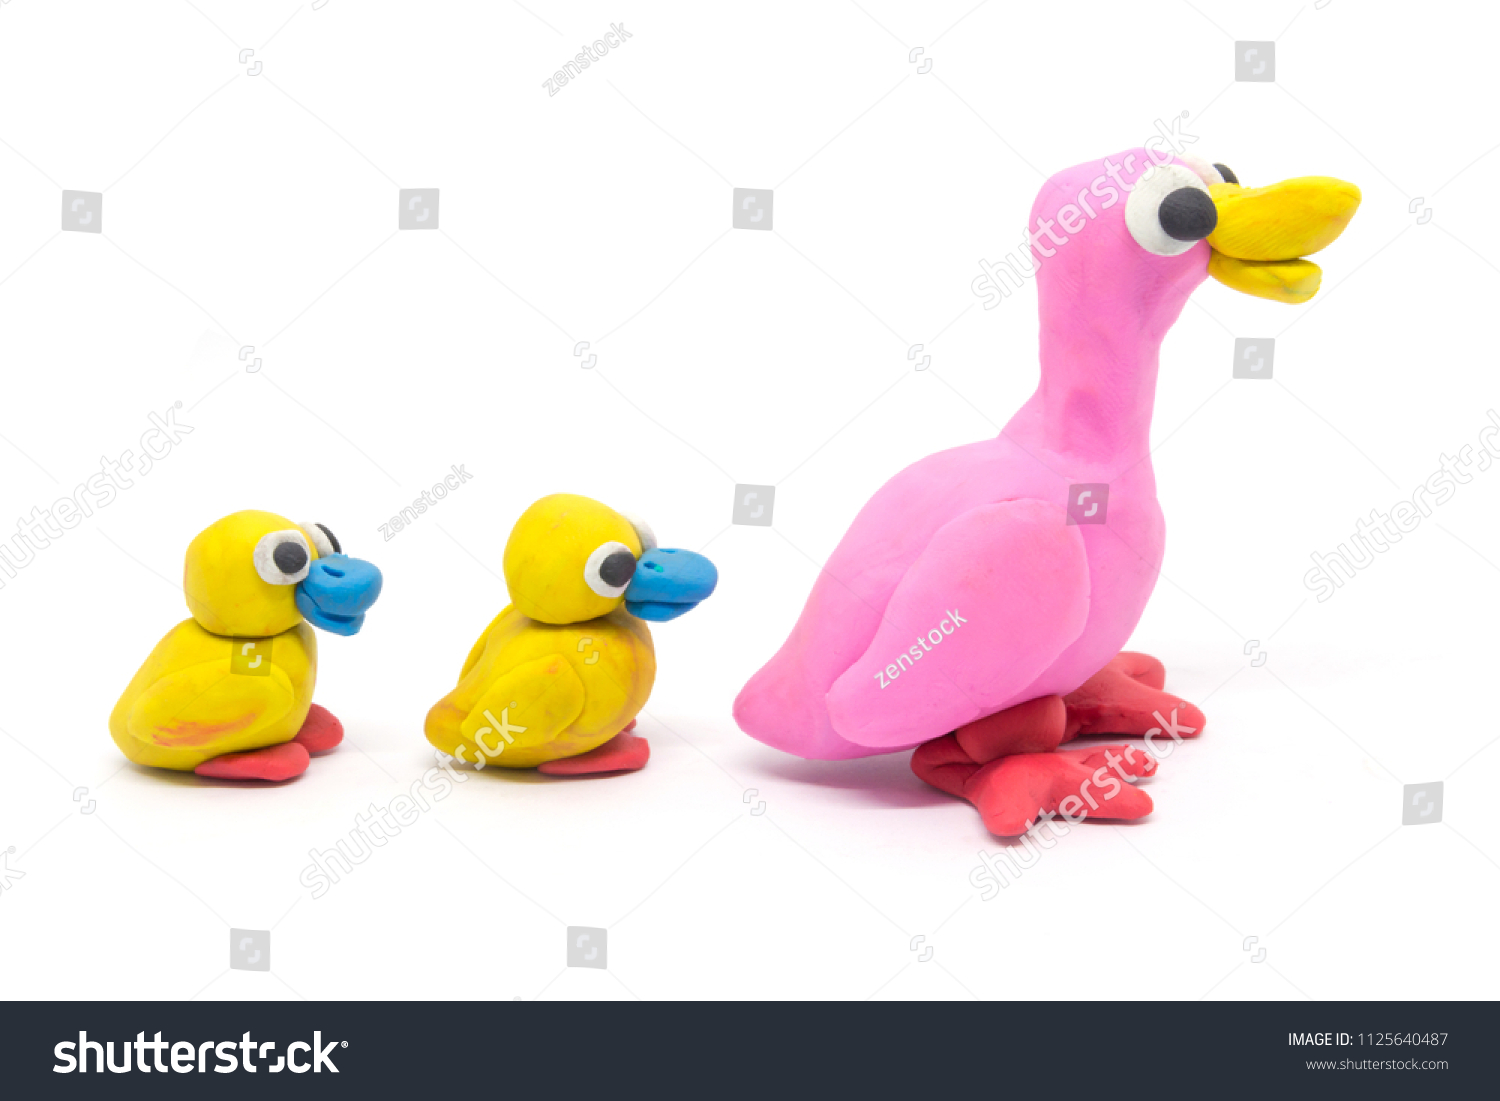 play doh ducks